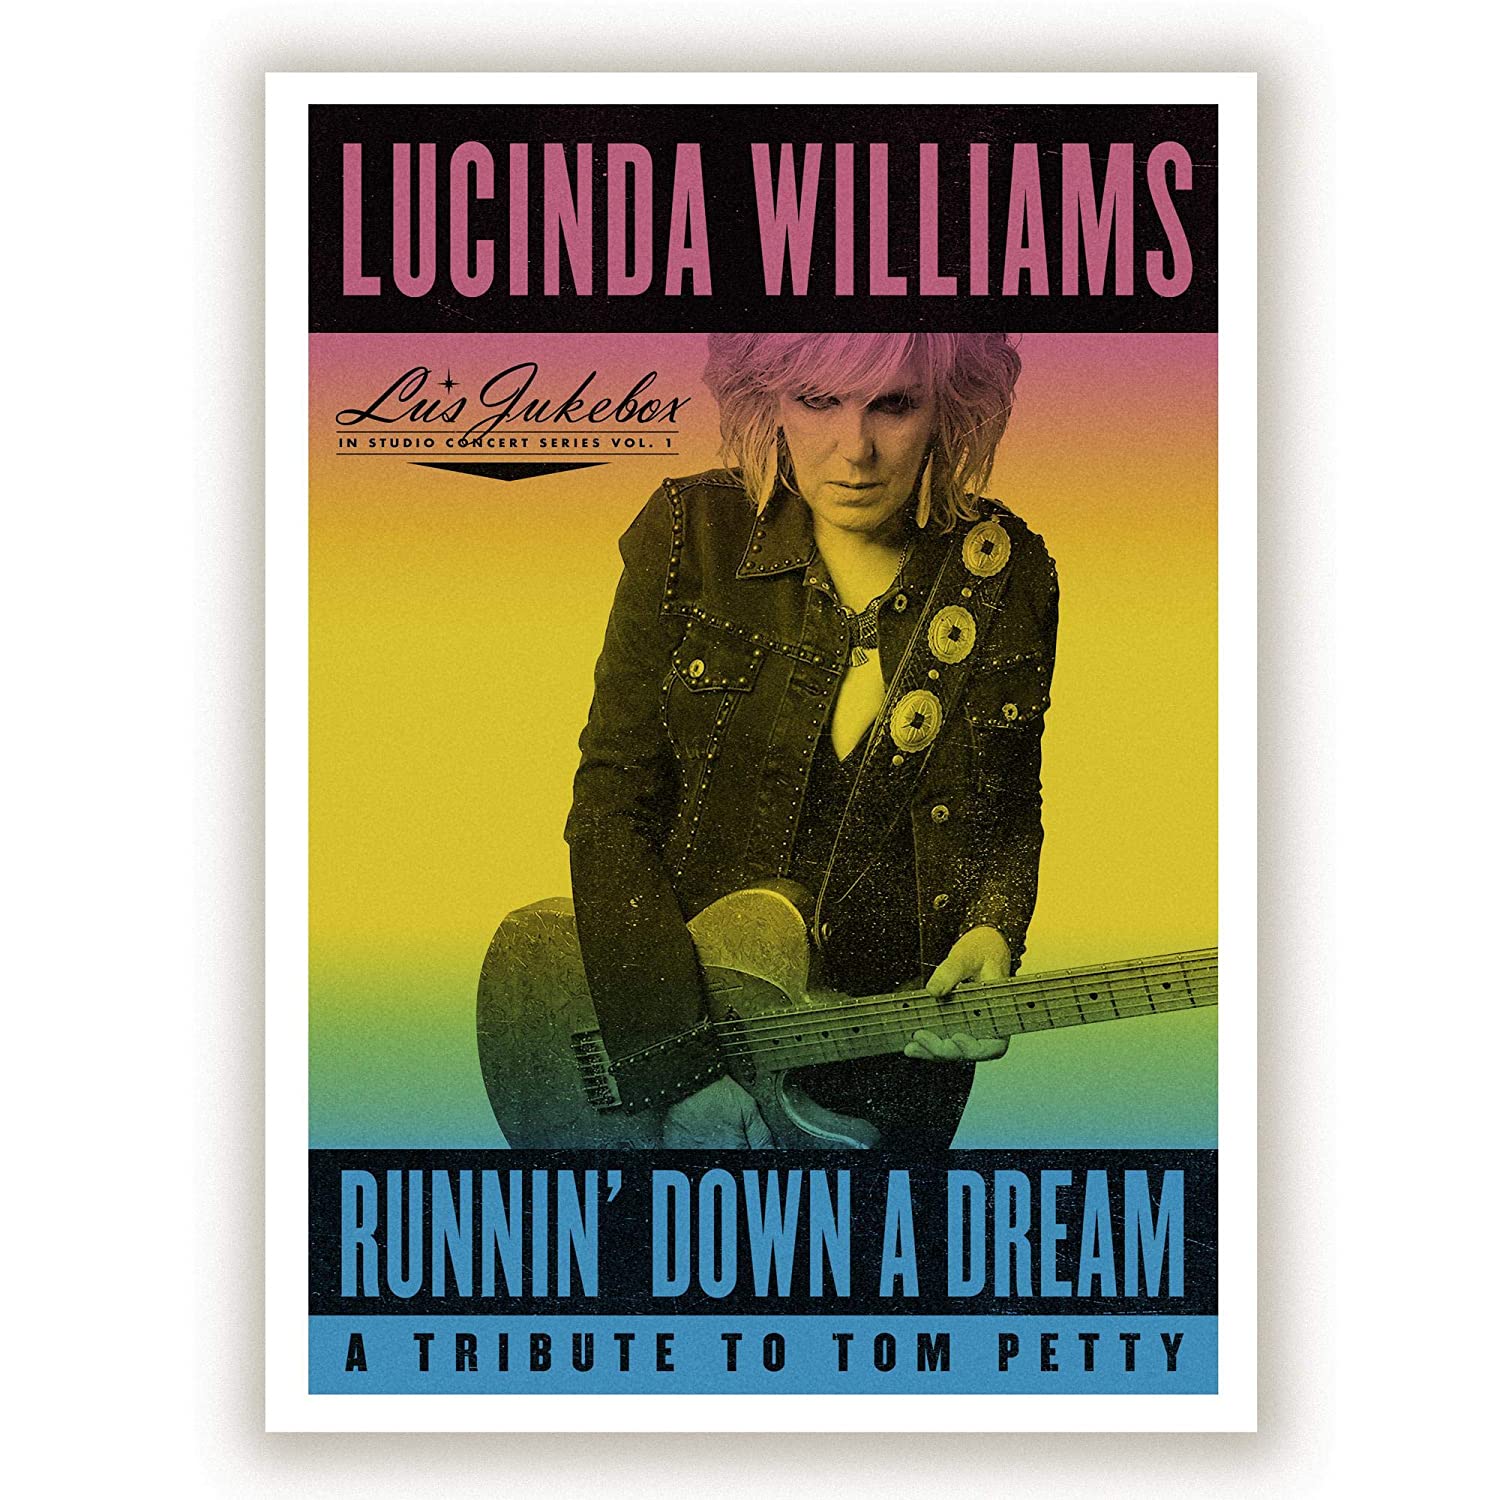 Runnin' Down A Dream - A Tribute to Tom Petty